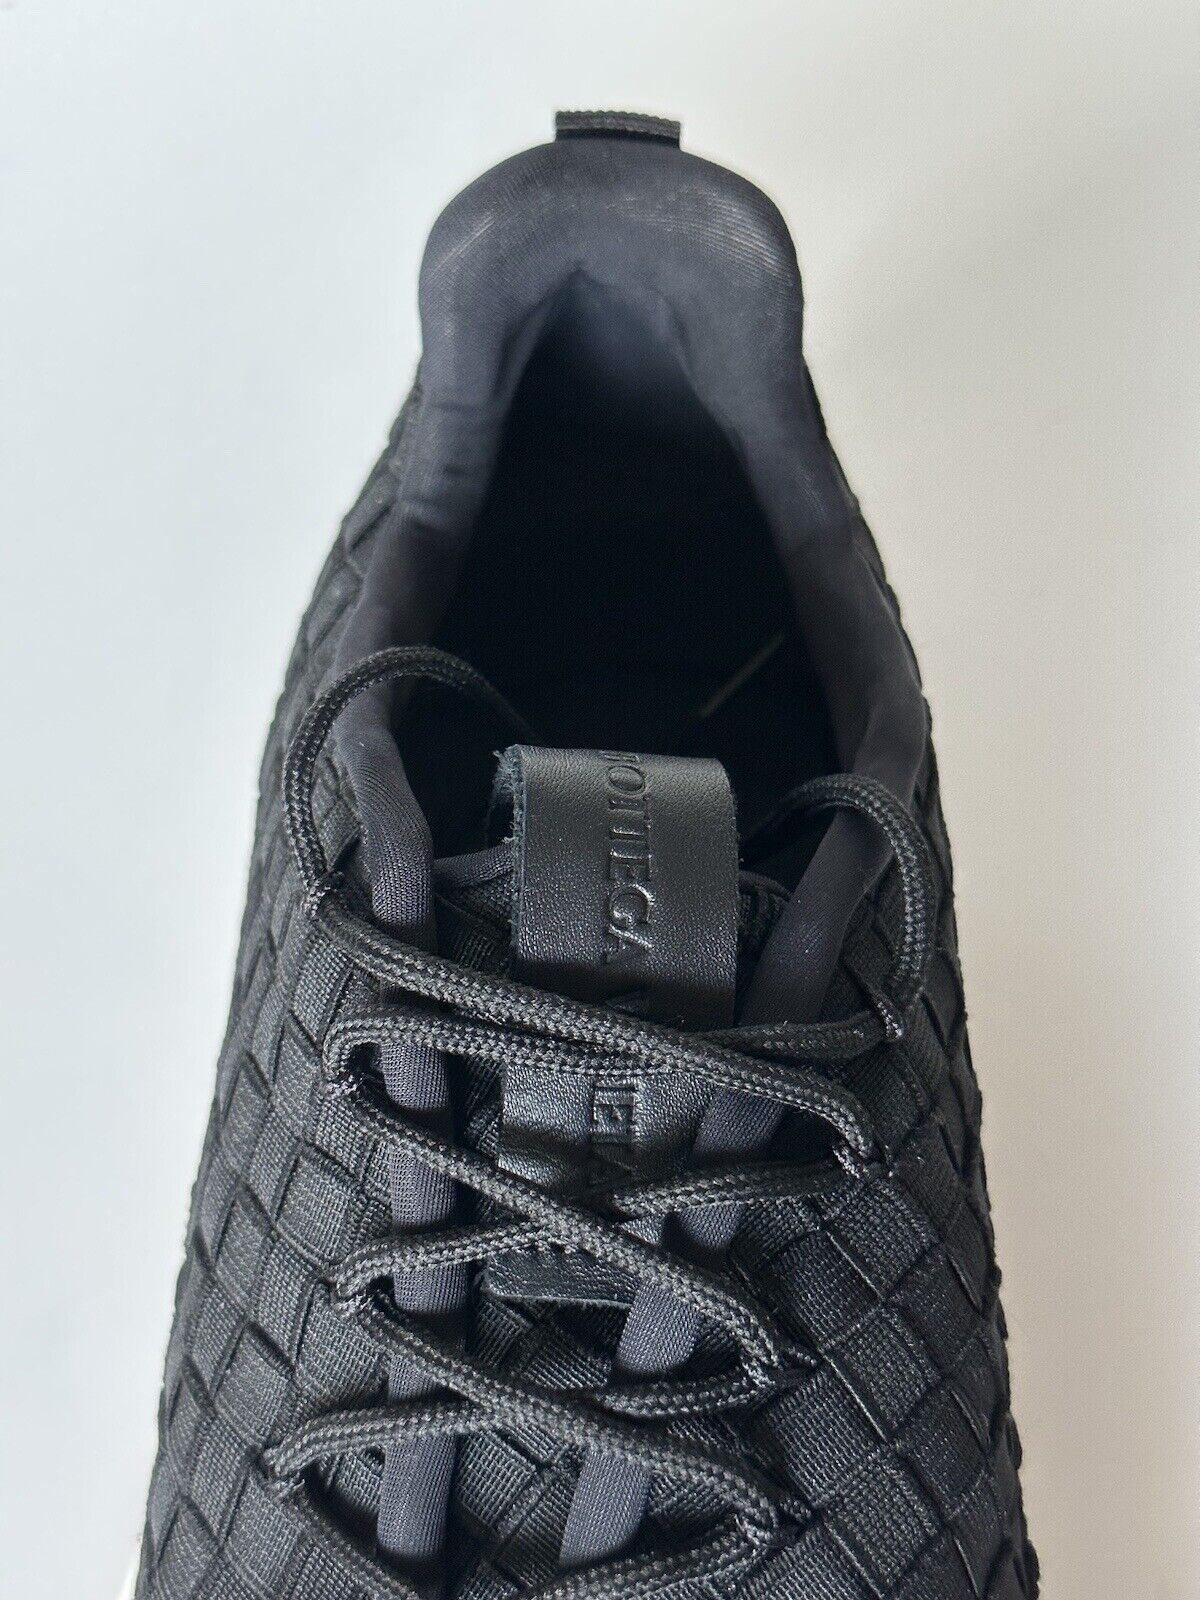 NIB $790 Bottega Veneta Men's Speedster Sneakers Black 8.5 US (41.5 Euro) 609915